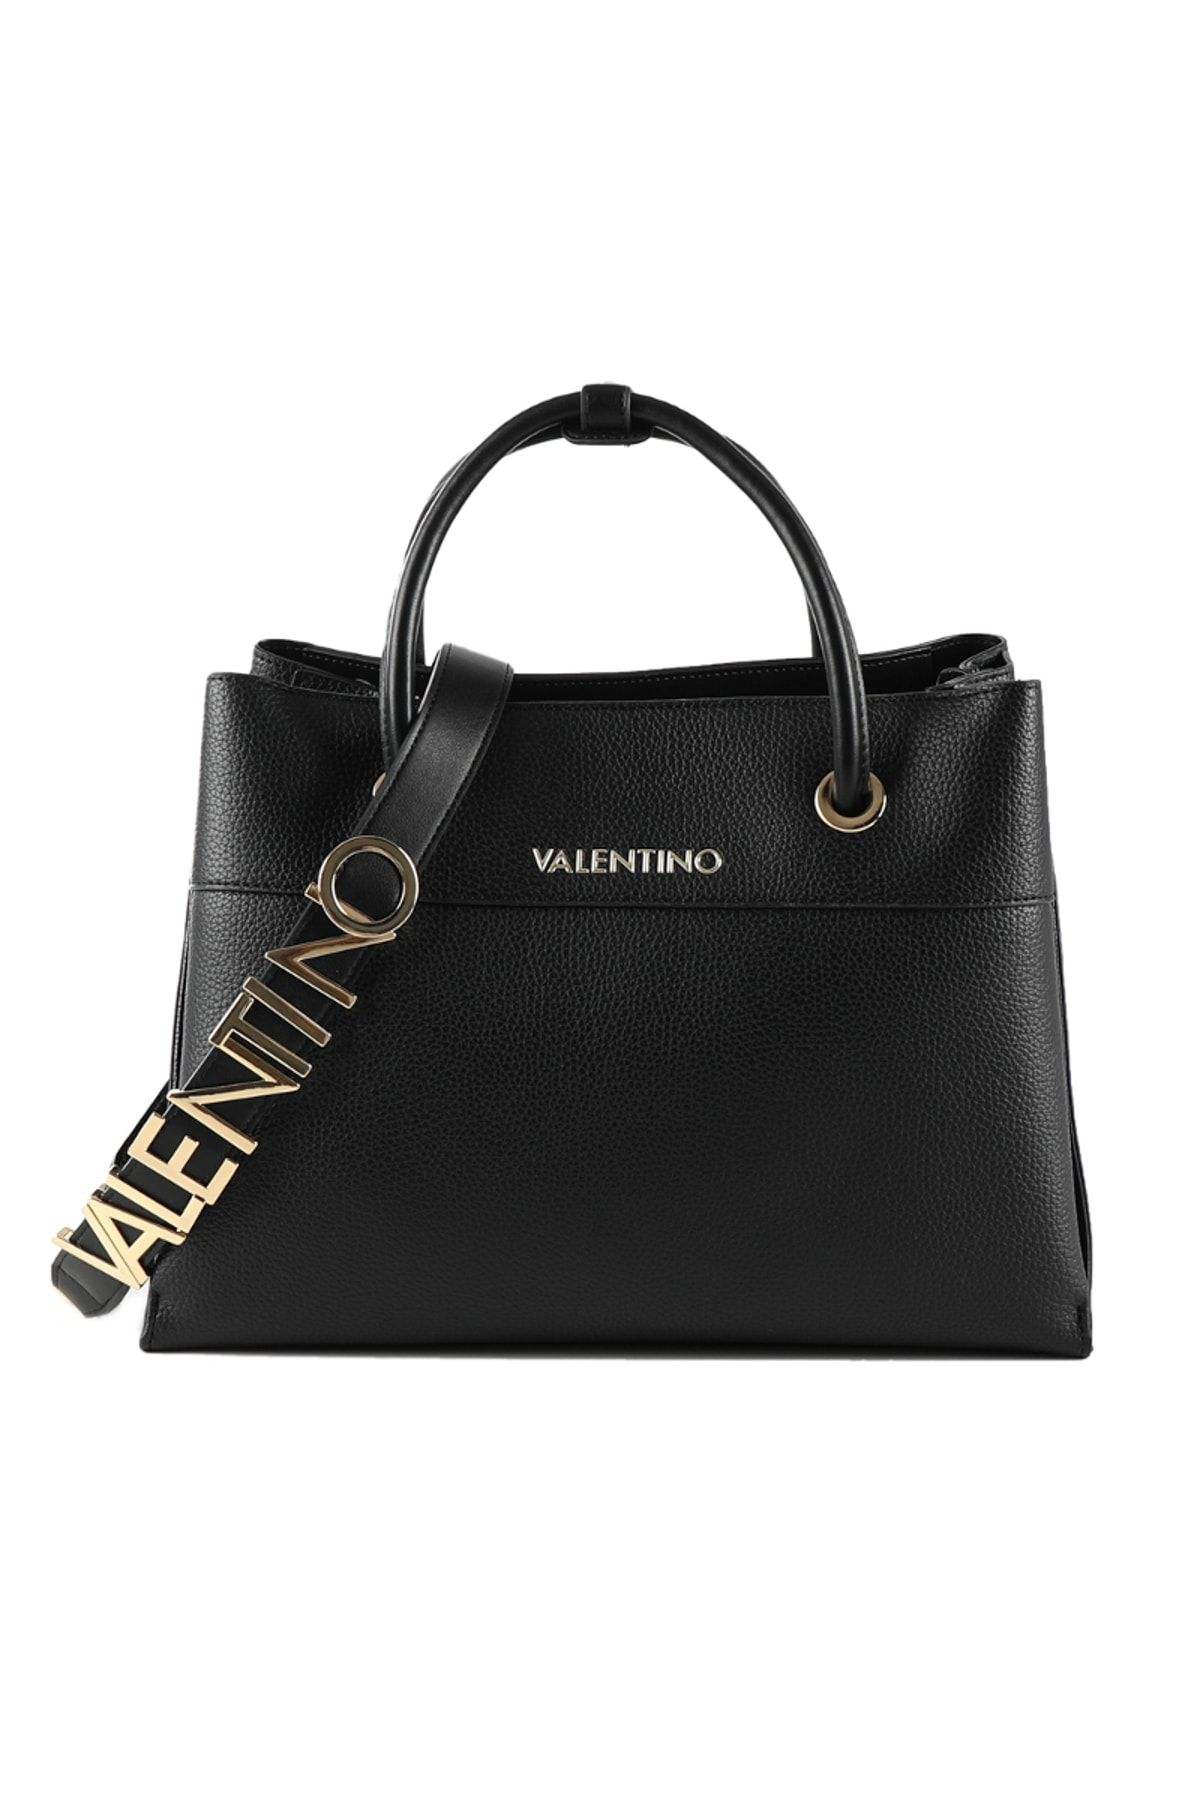 Valentino Garavani Tote Bags for Women | Nordstrom